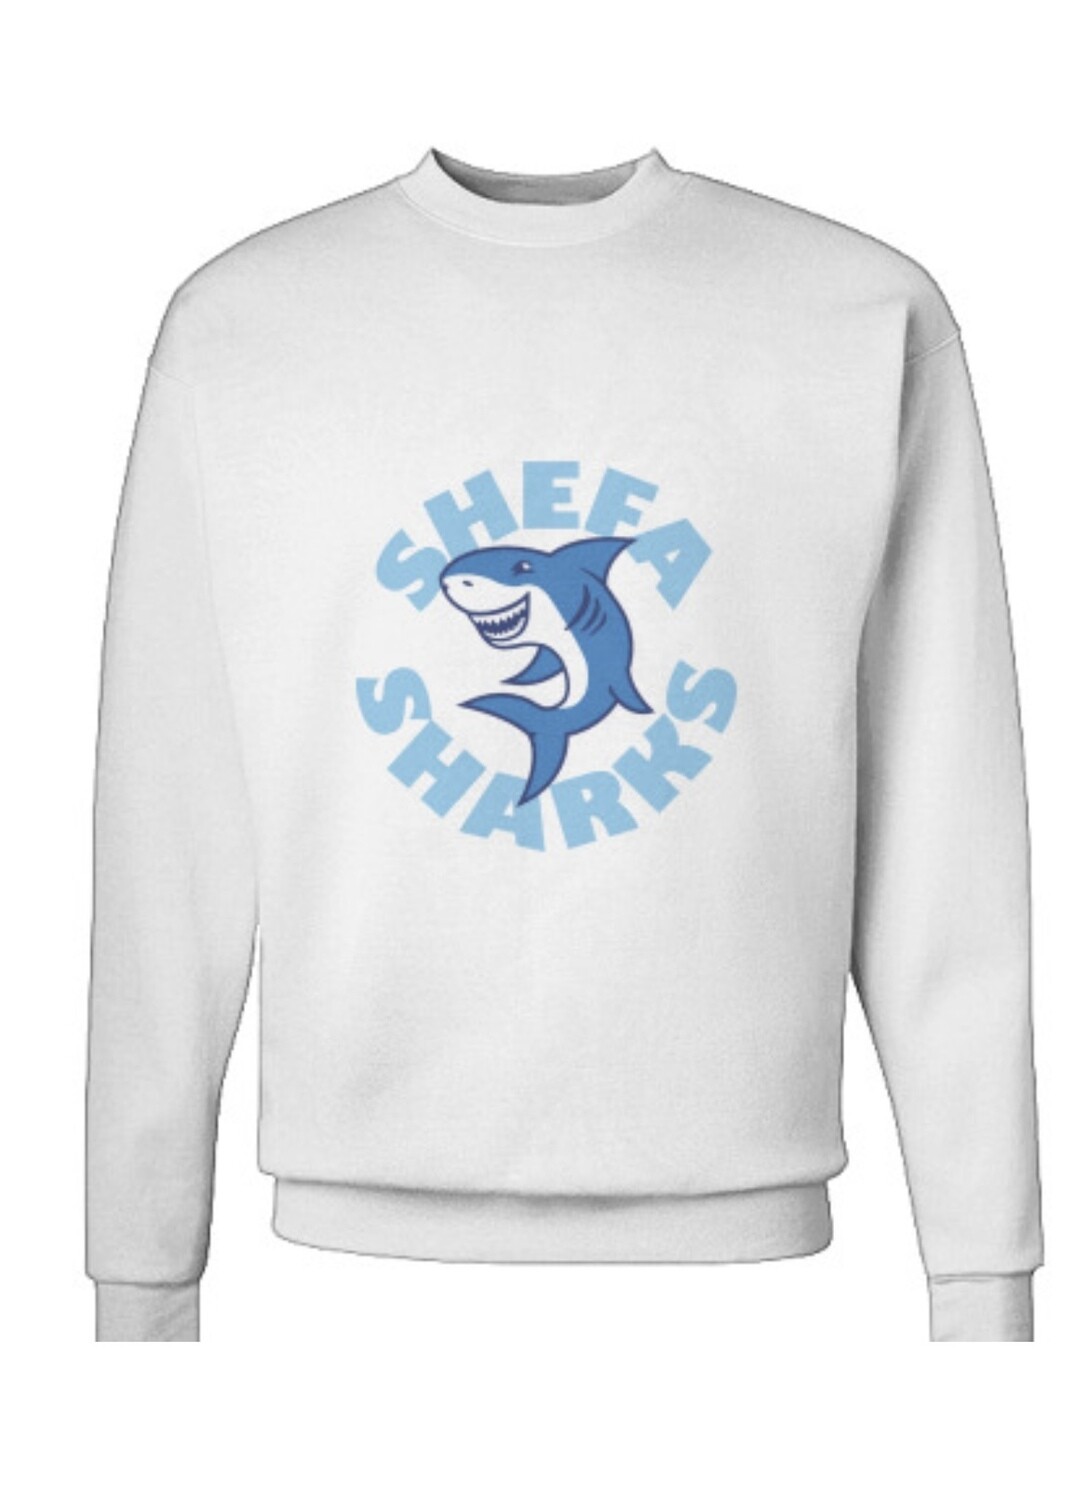 Sharks White Crewneck Sweatshirt